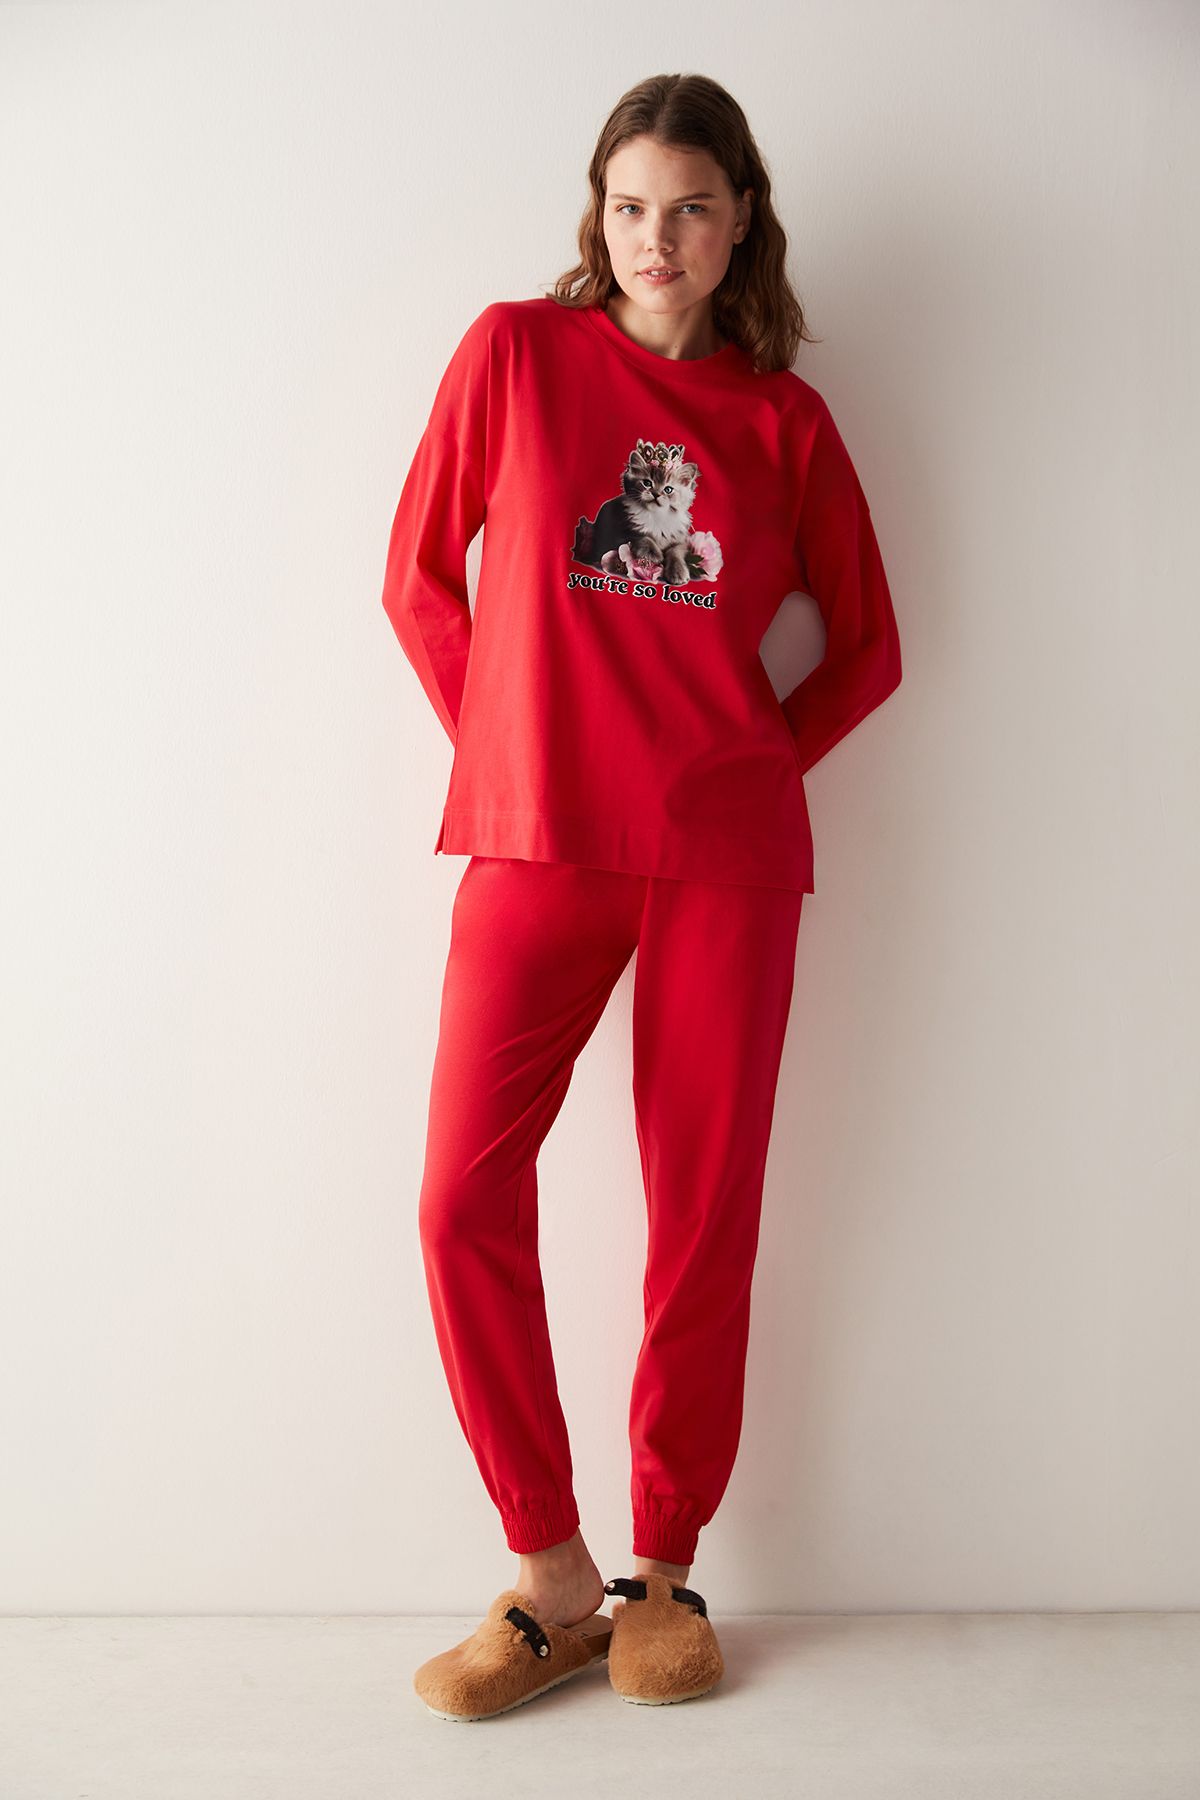 Penti Love Kırmızı Pantolon Pijama Takımı